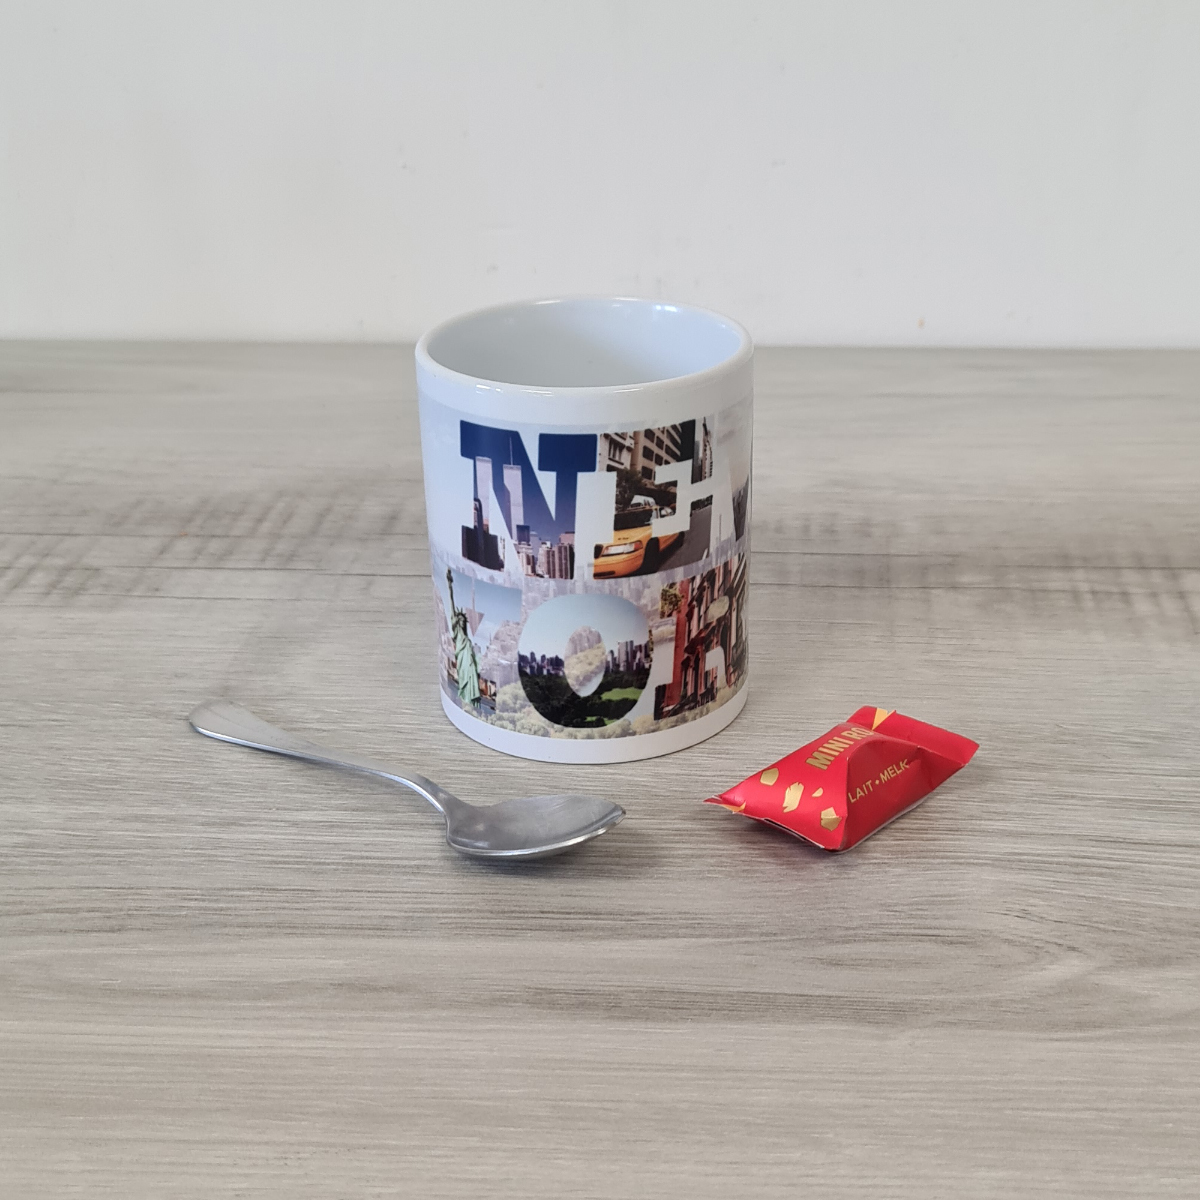 Aigle ceramic mug by Cbkreation